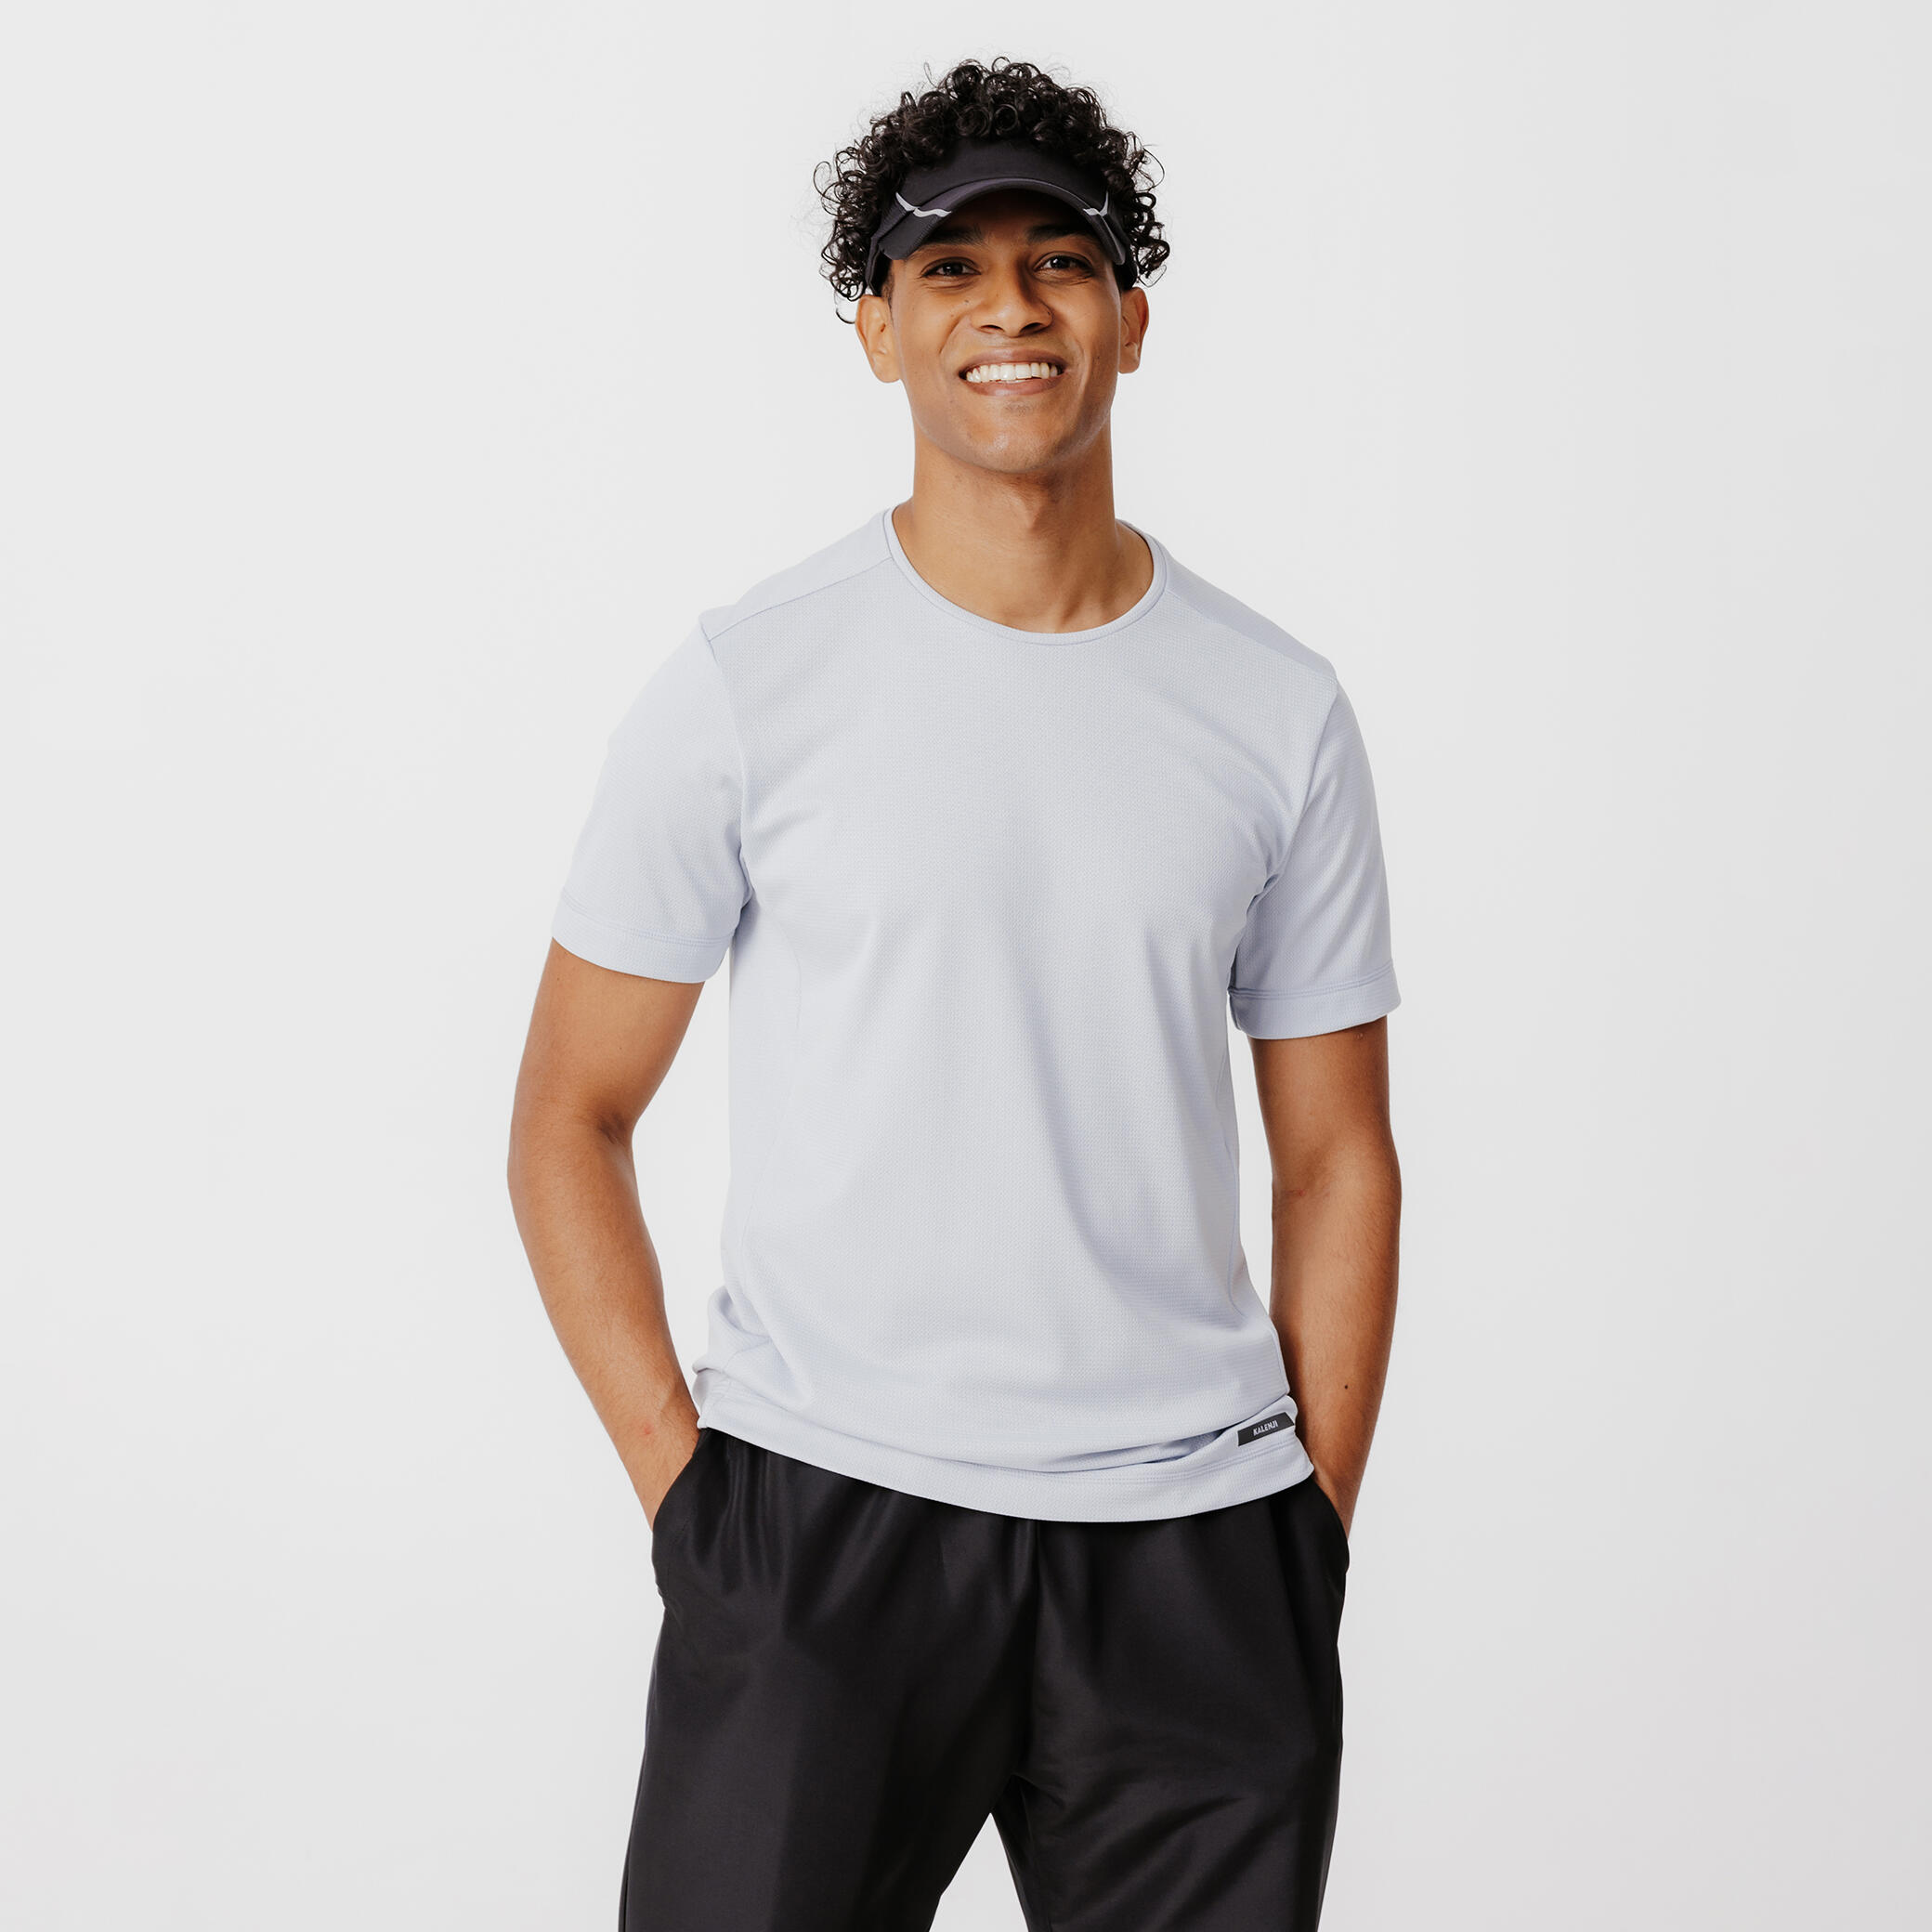 Men's Running Breathable Run Dry T-Shirt - Grey